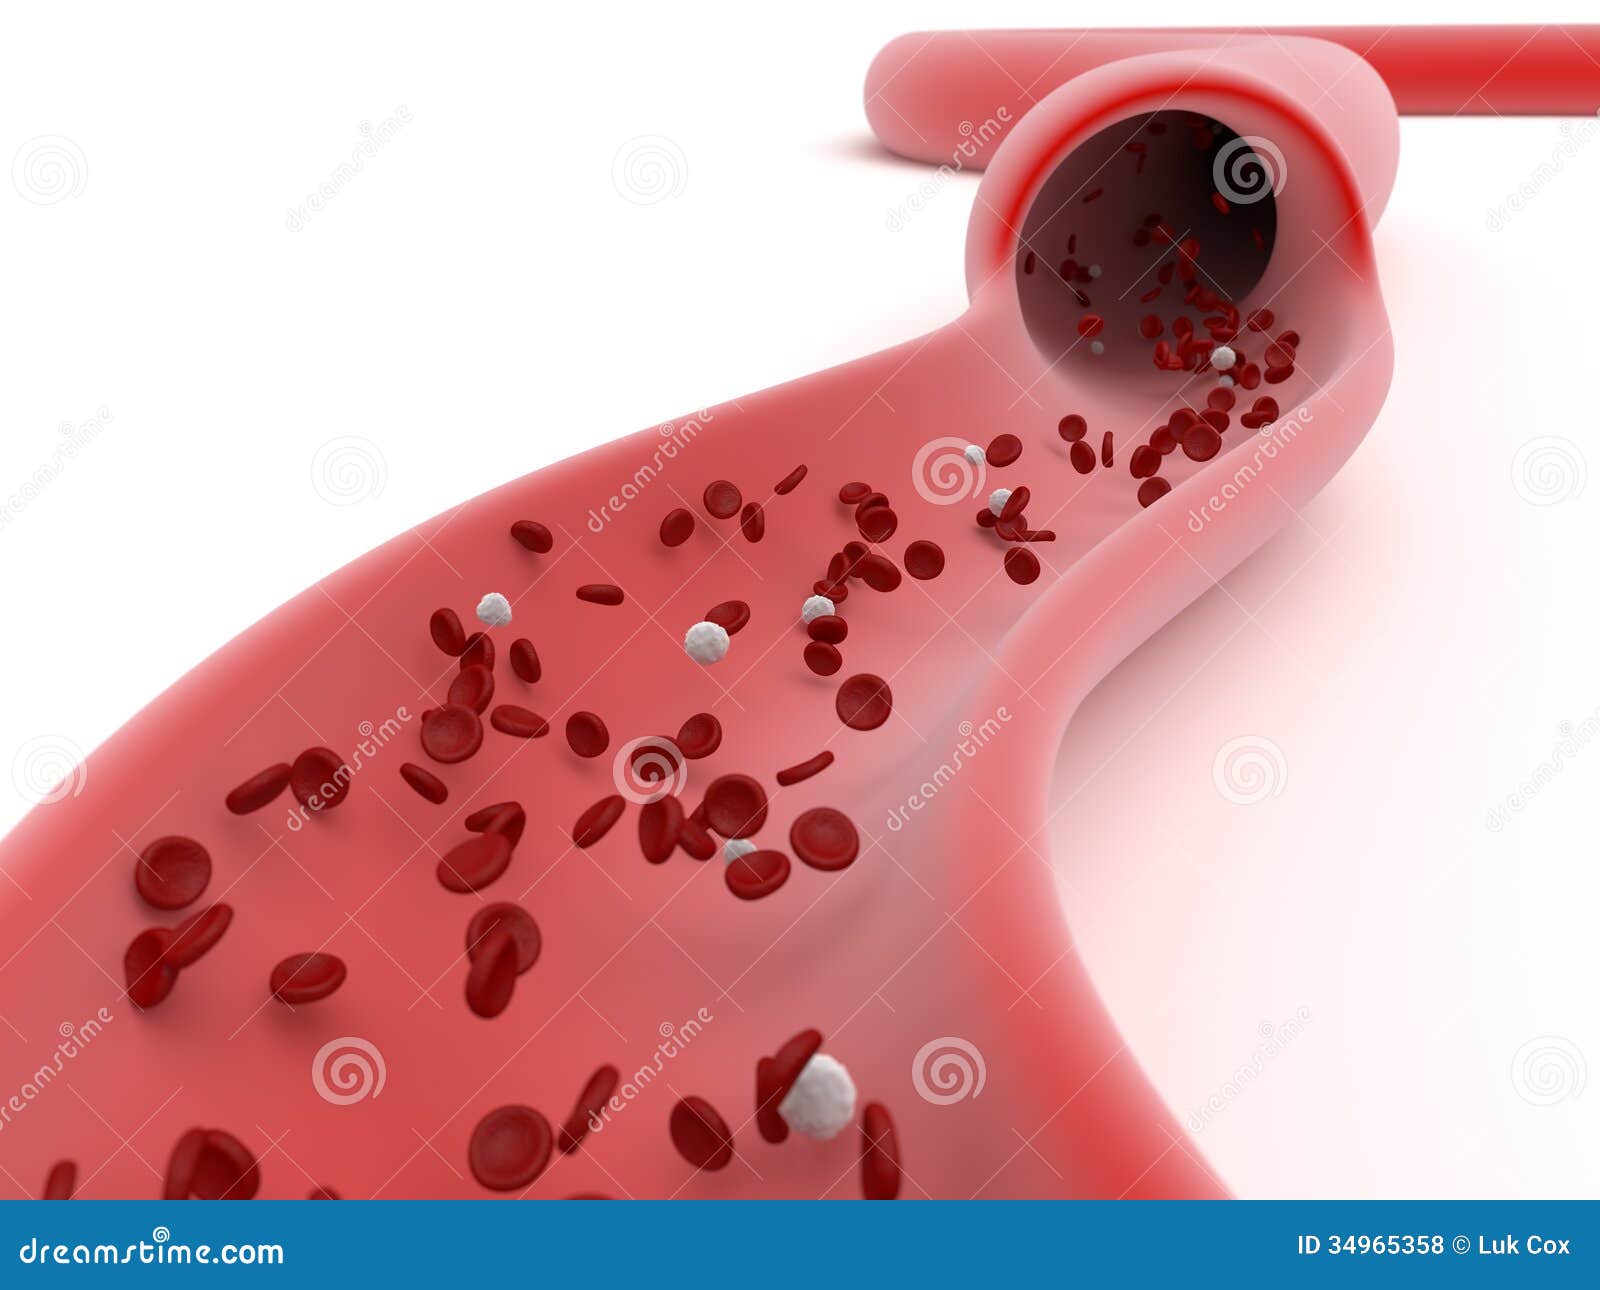 clipart blood vessels - photo #43